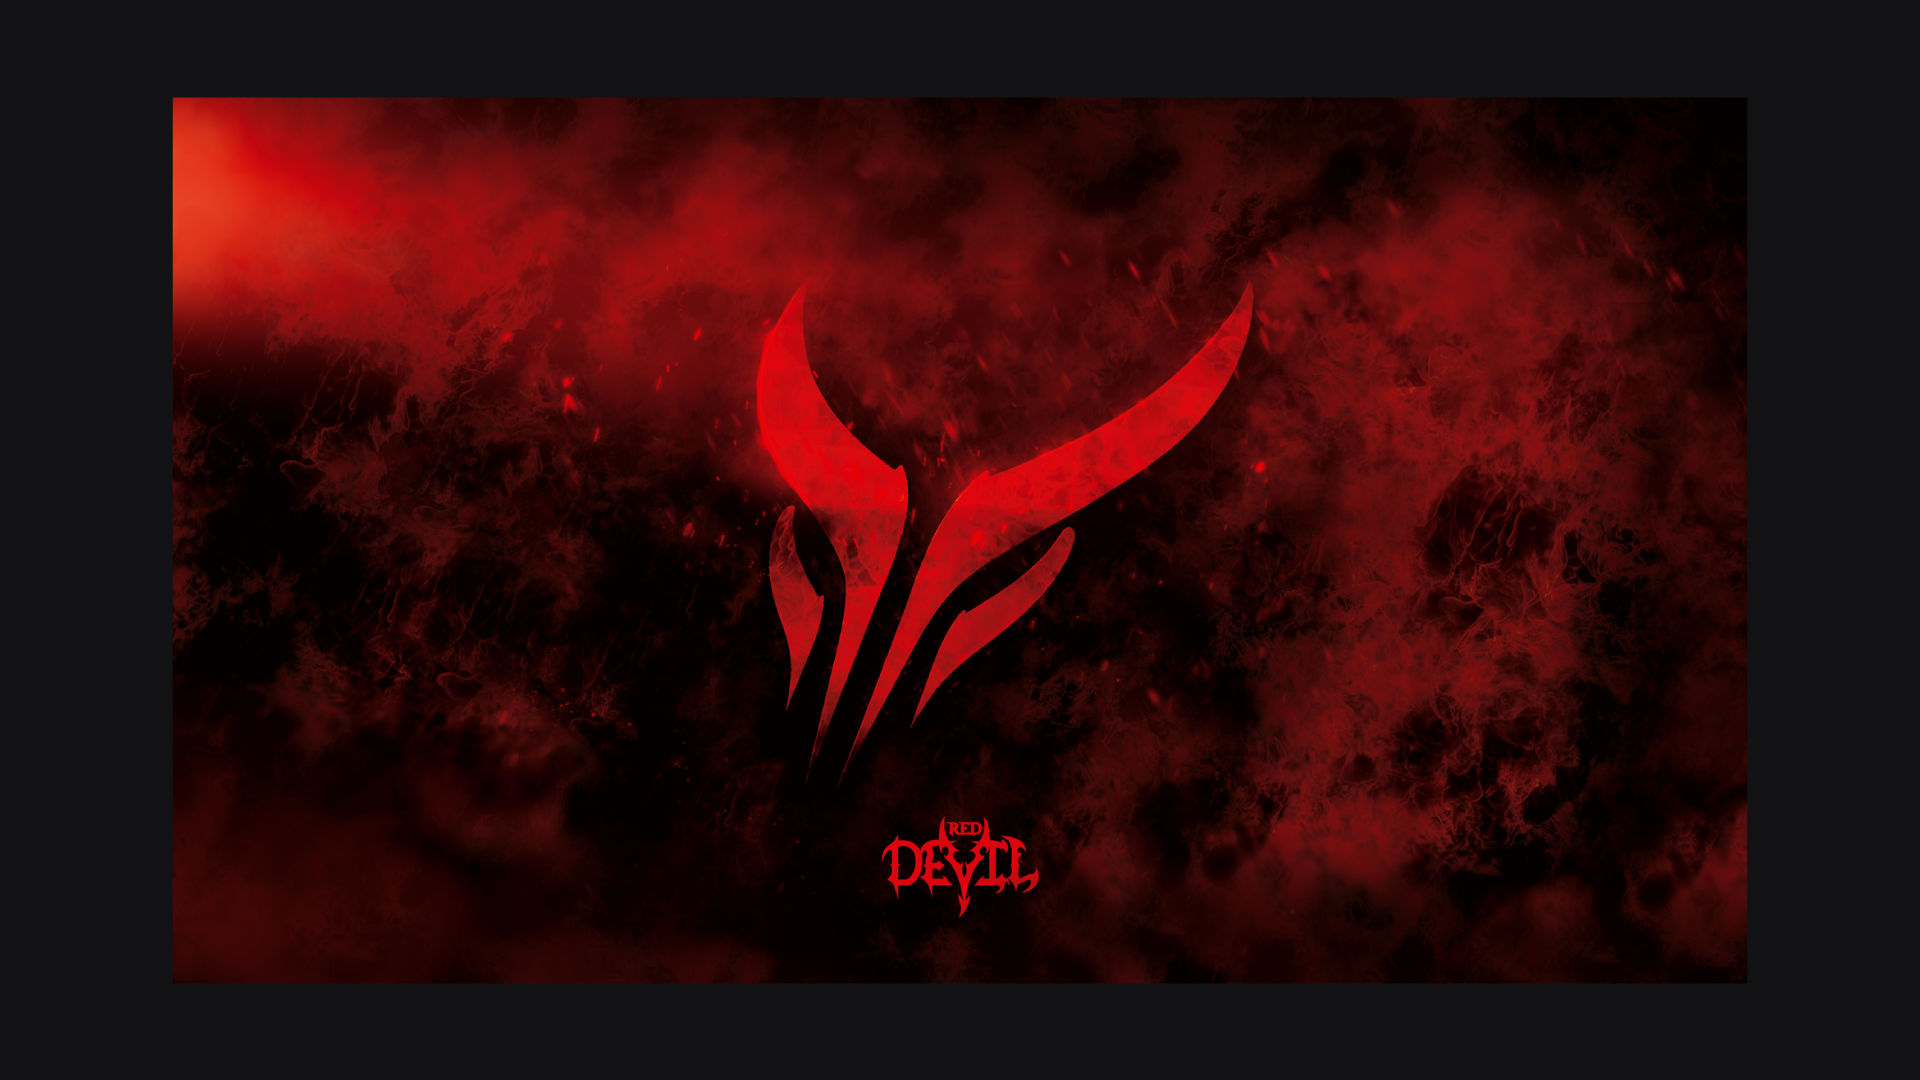 Powercolor red devil new symbol design ui and artworks on